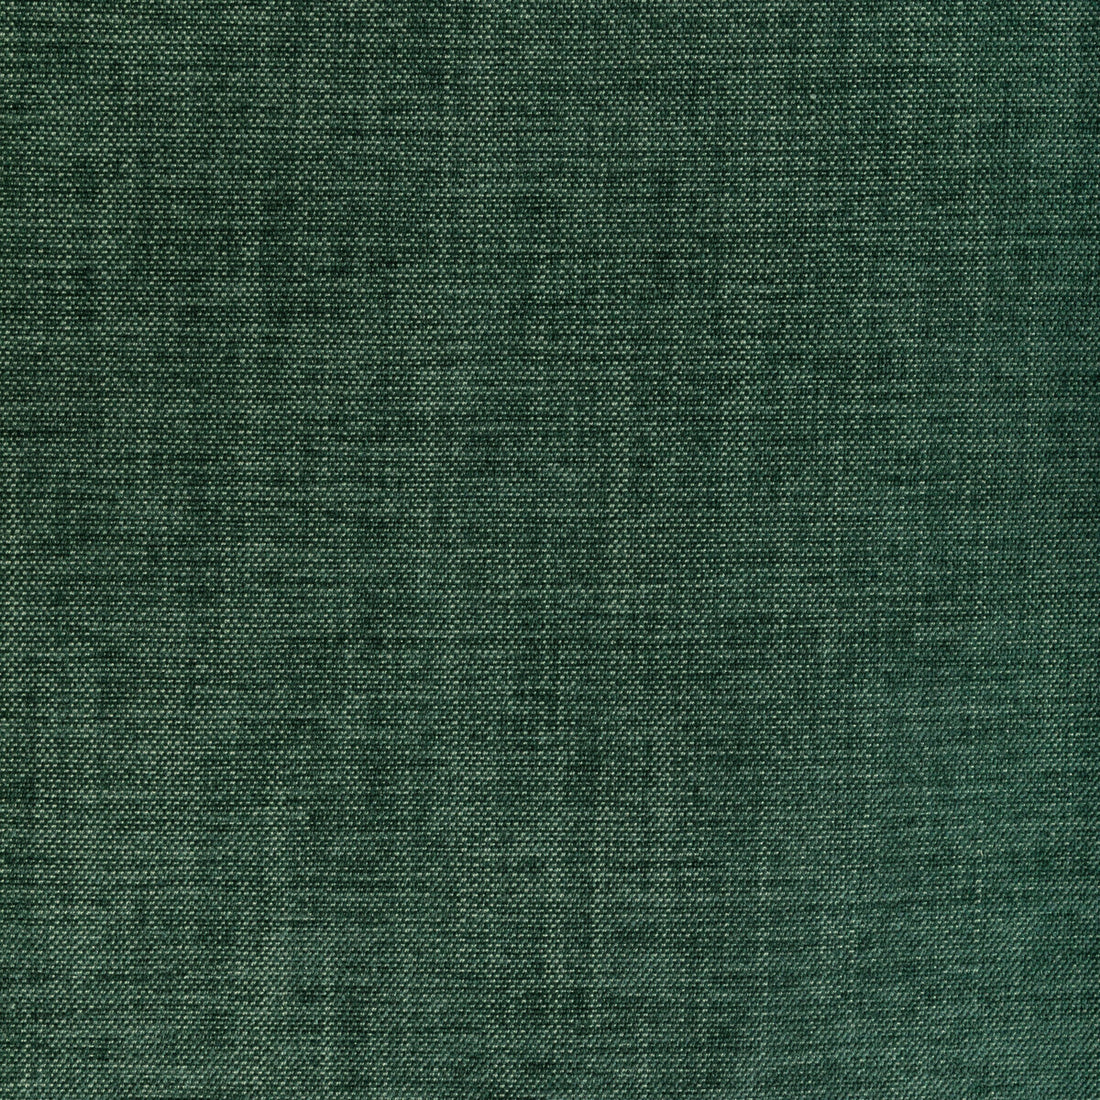 Kravet Smart fabric in 36650-3 color - pattern 36650.3.0 - by Kravet Smart in the Performance Kravetarmor collection